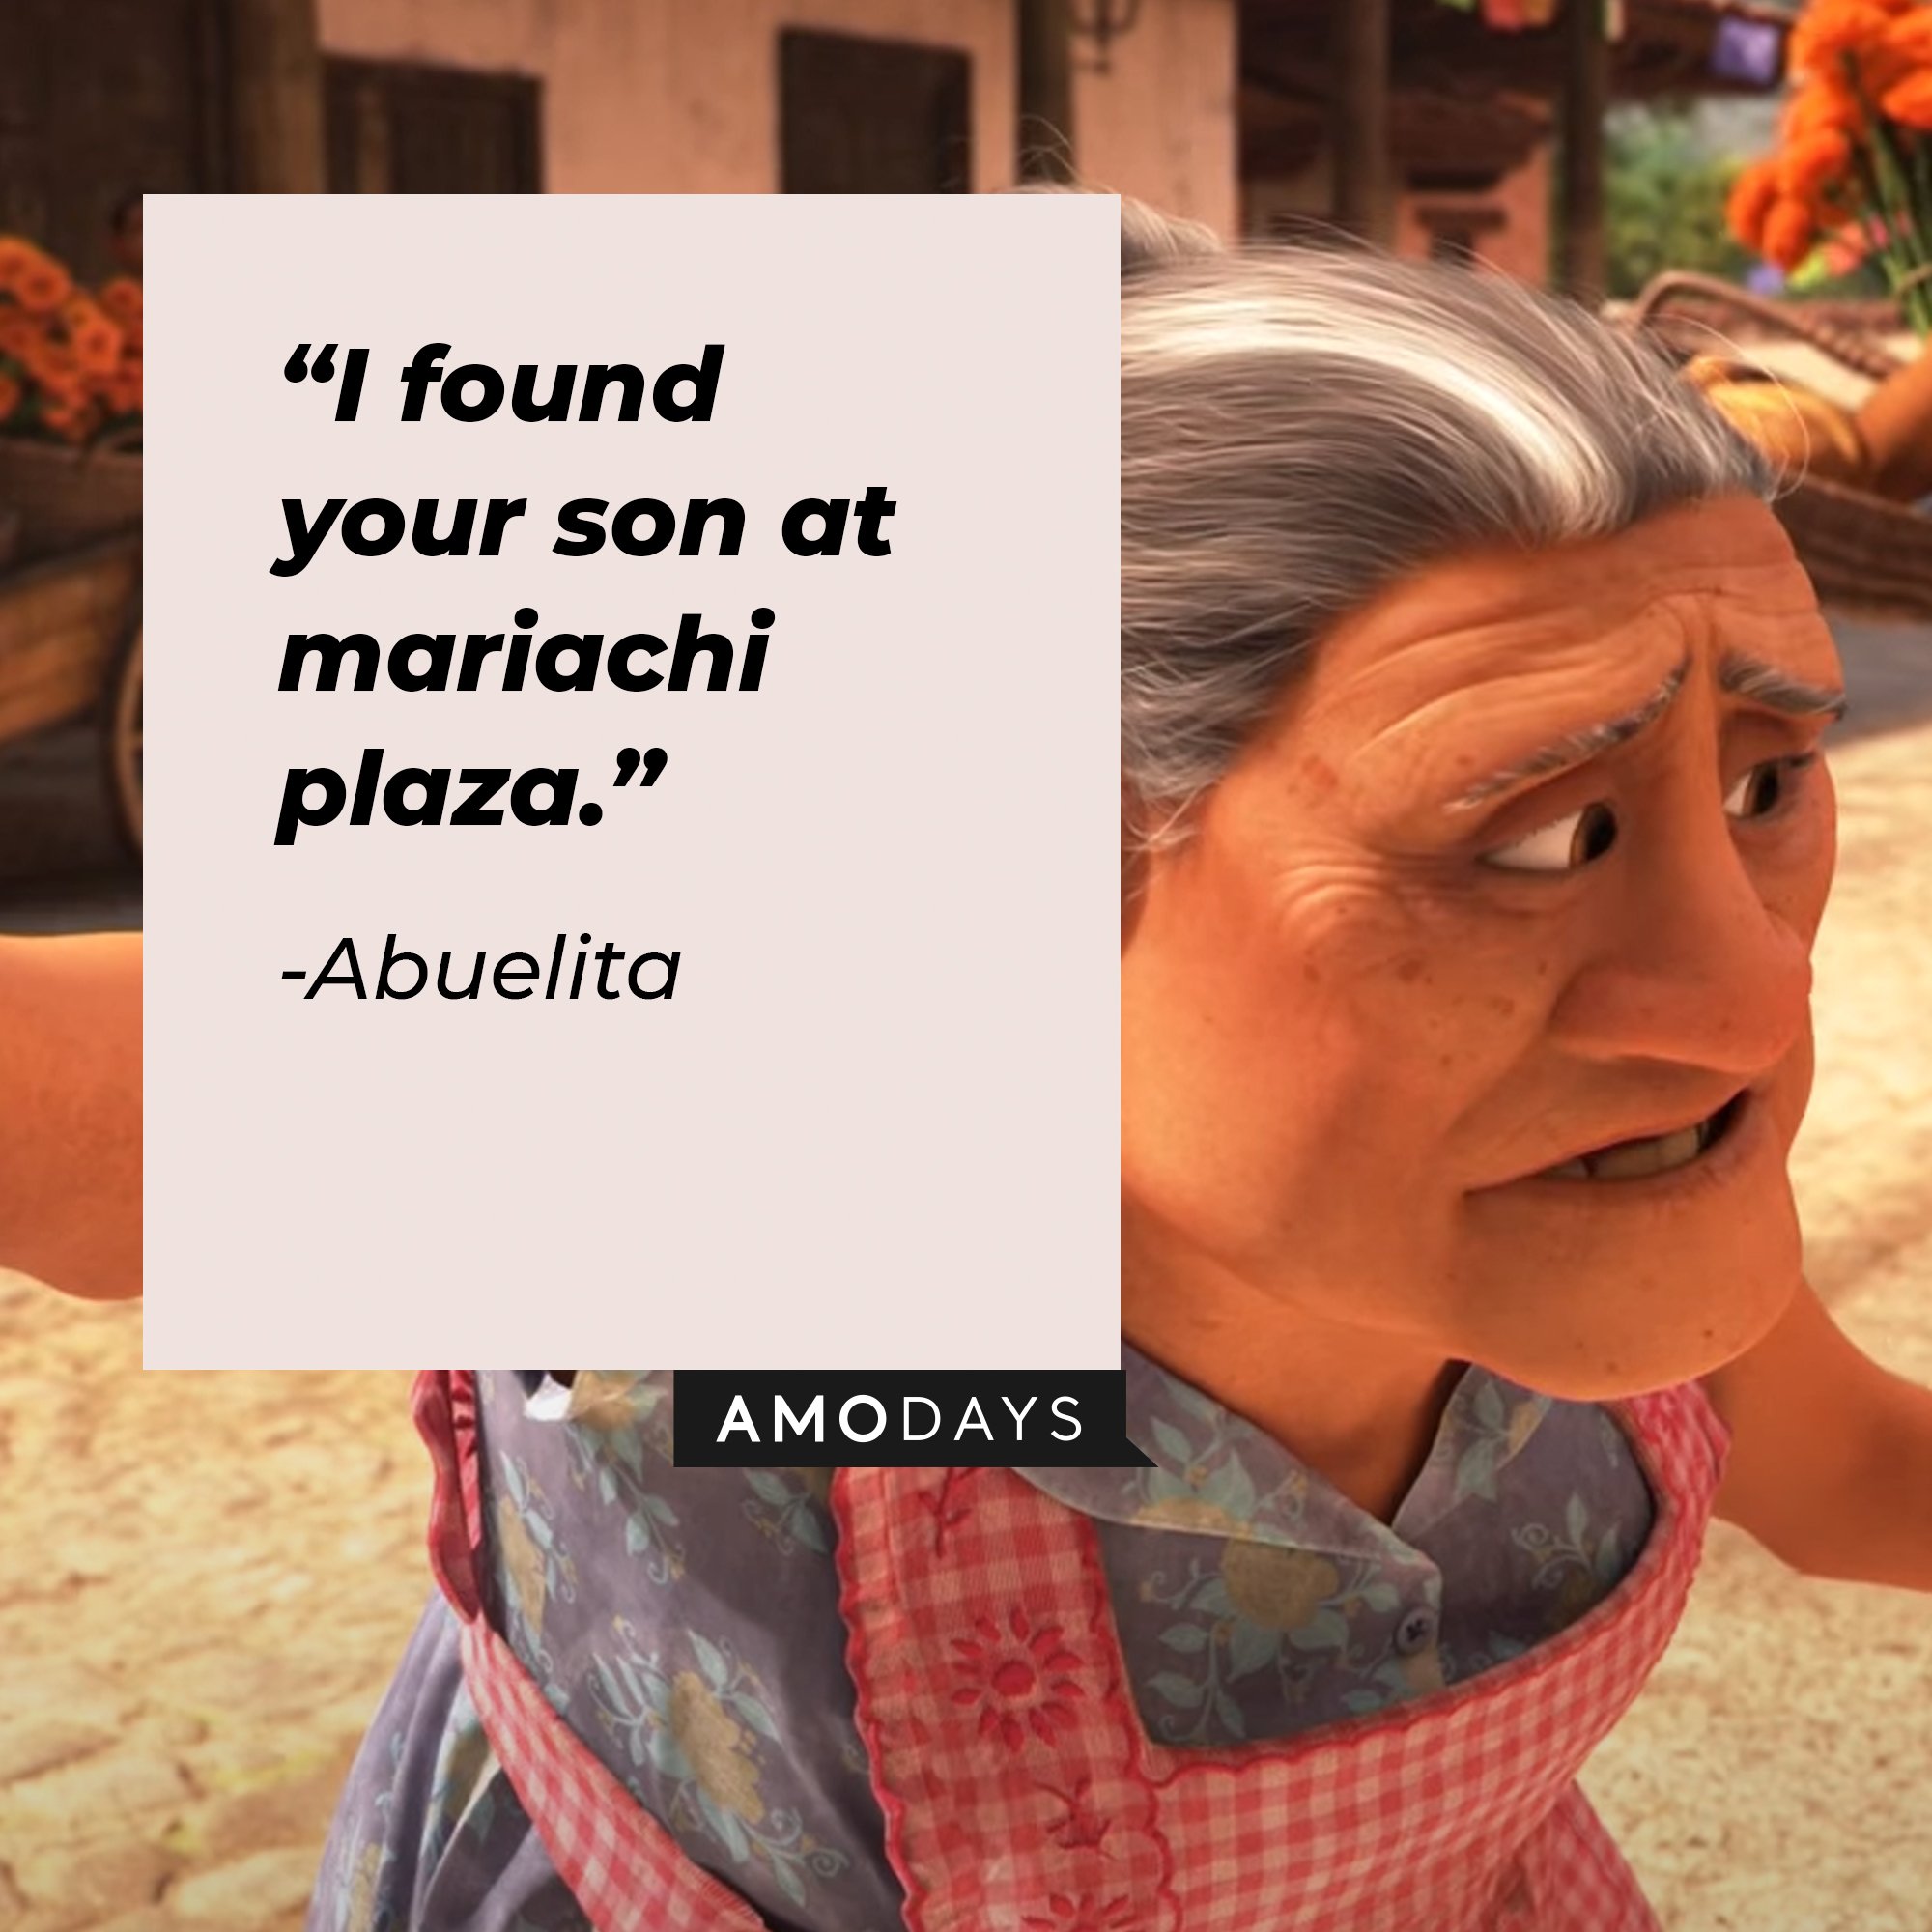 Abuelita's quote: “I found your son at mariachi plaza.” | Image: AmoDays